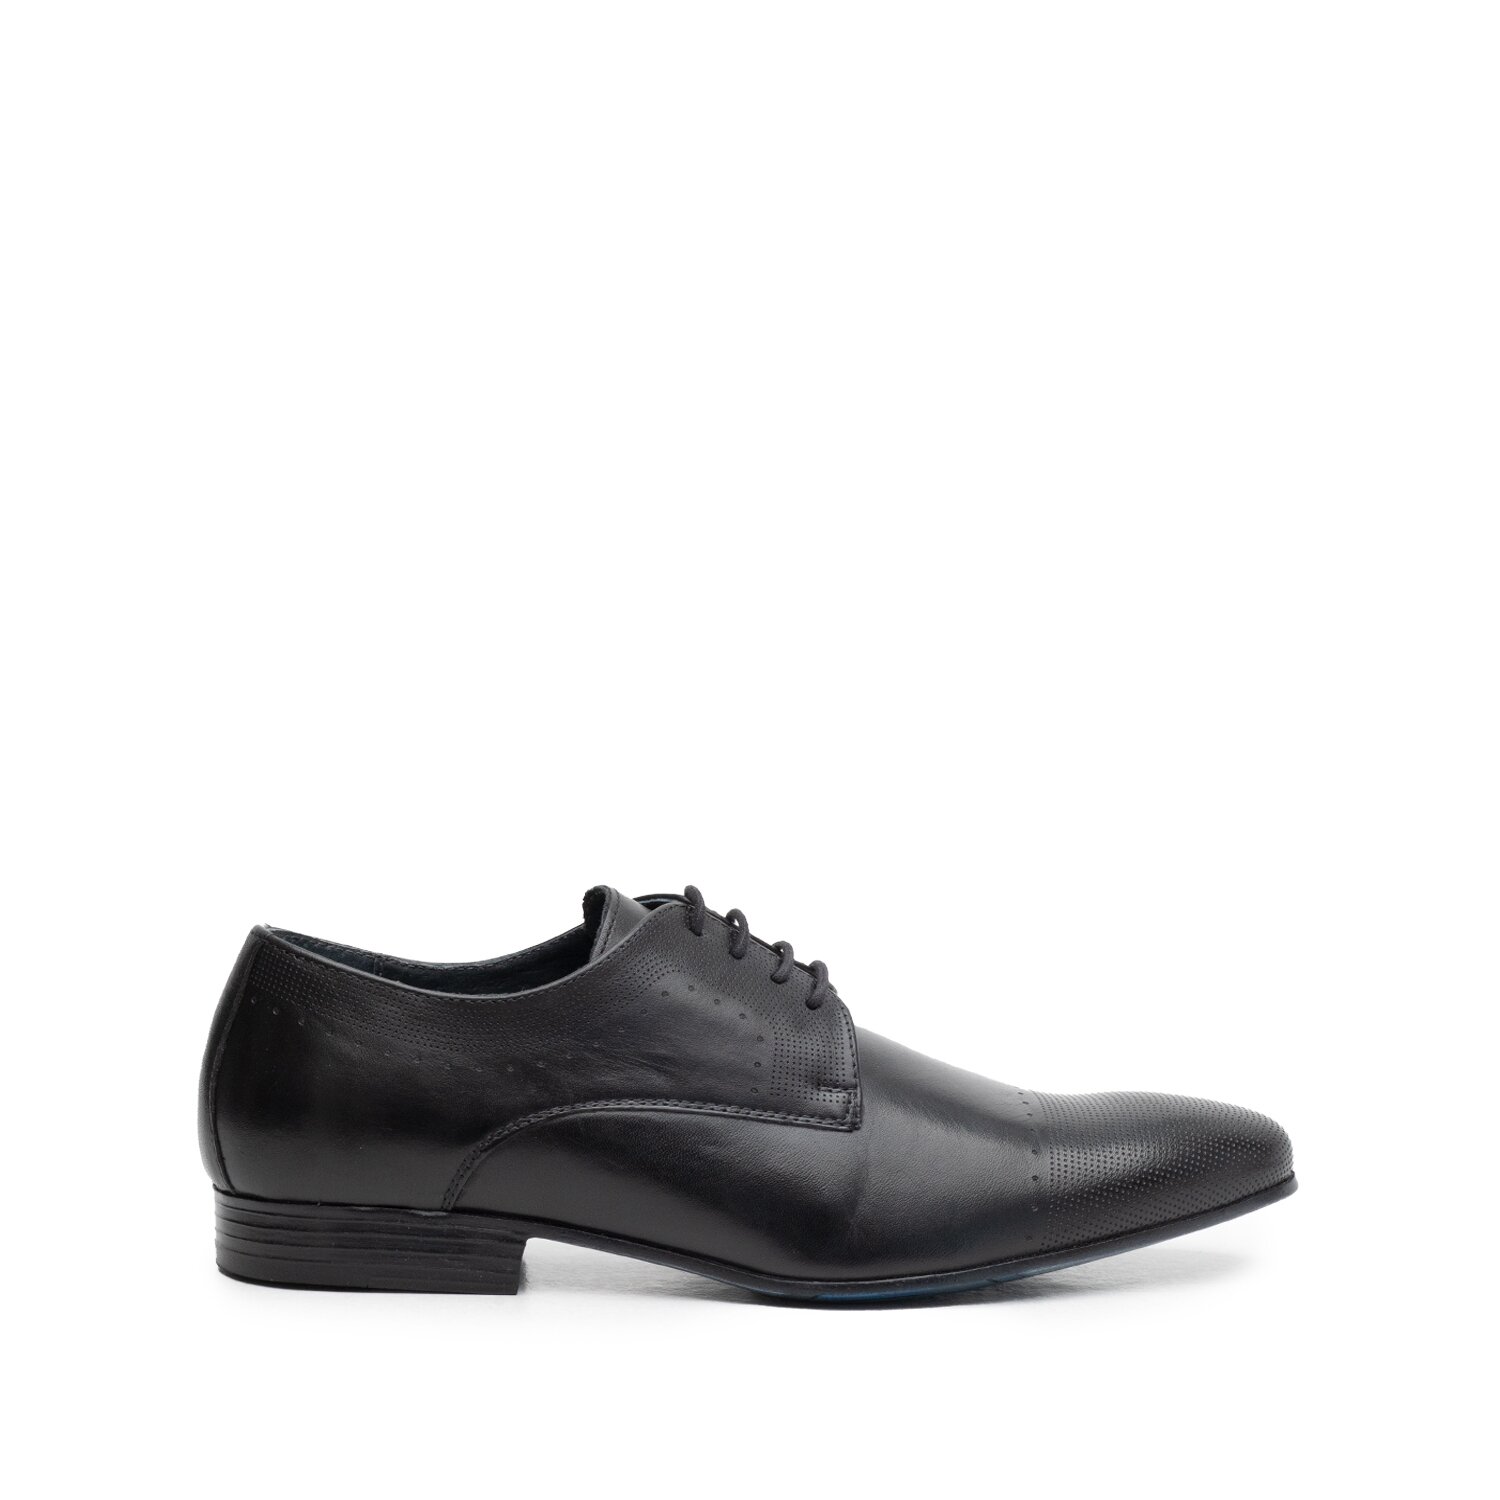 Pantofi eleganti barbati din piele naturala,Leofex - 885 negru box